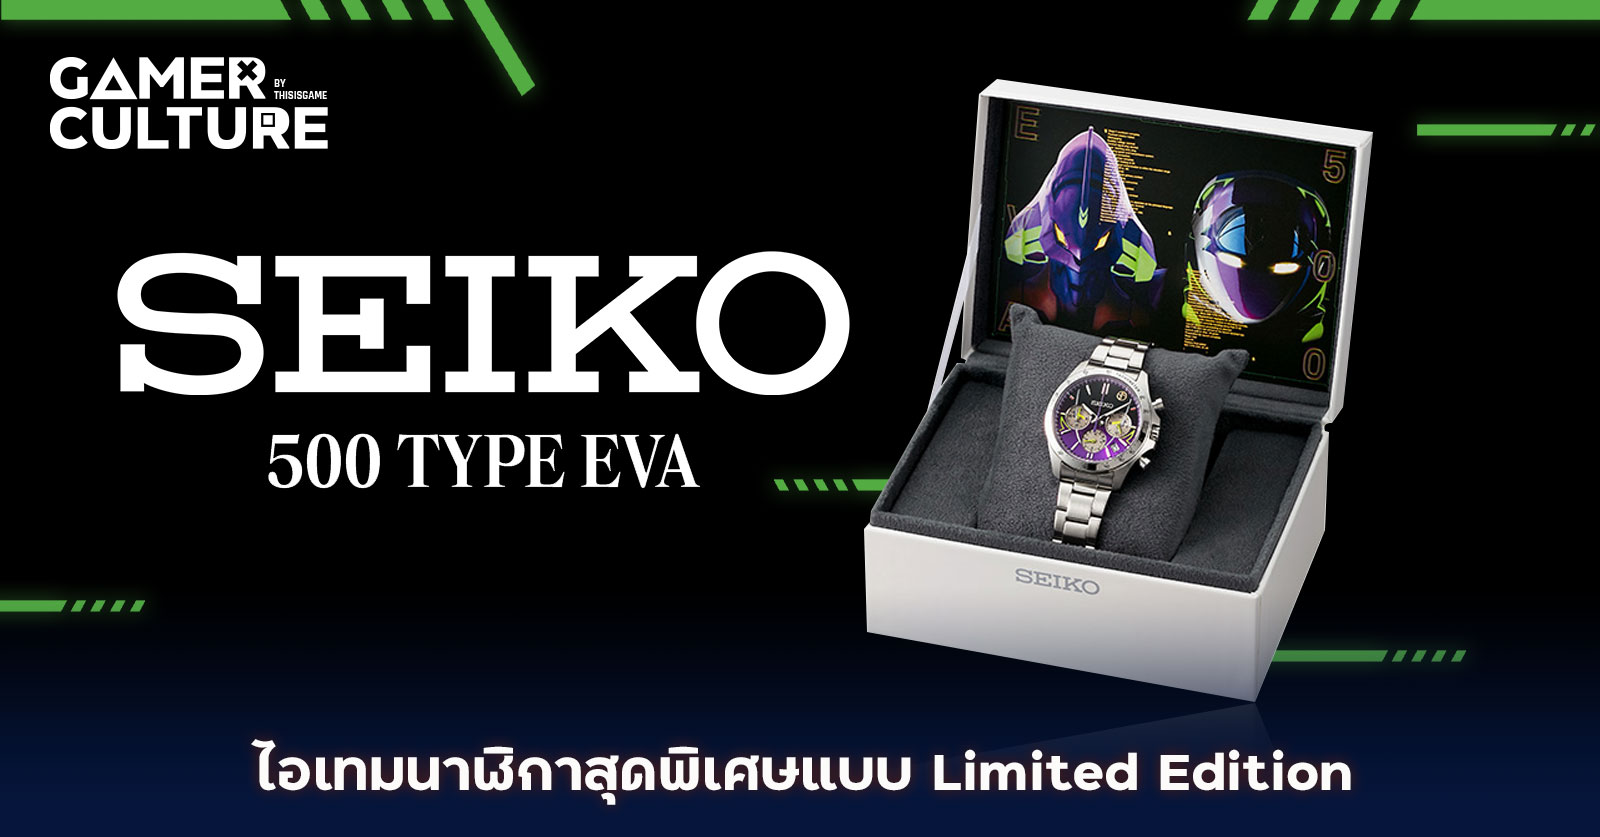 SEIKO X 500 TYPE EVA - Gamer Culture